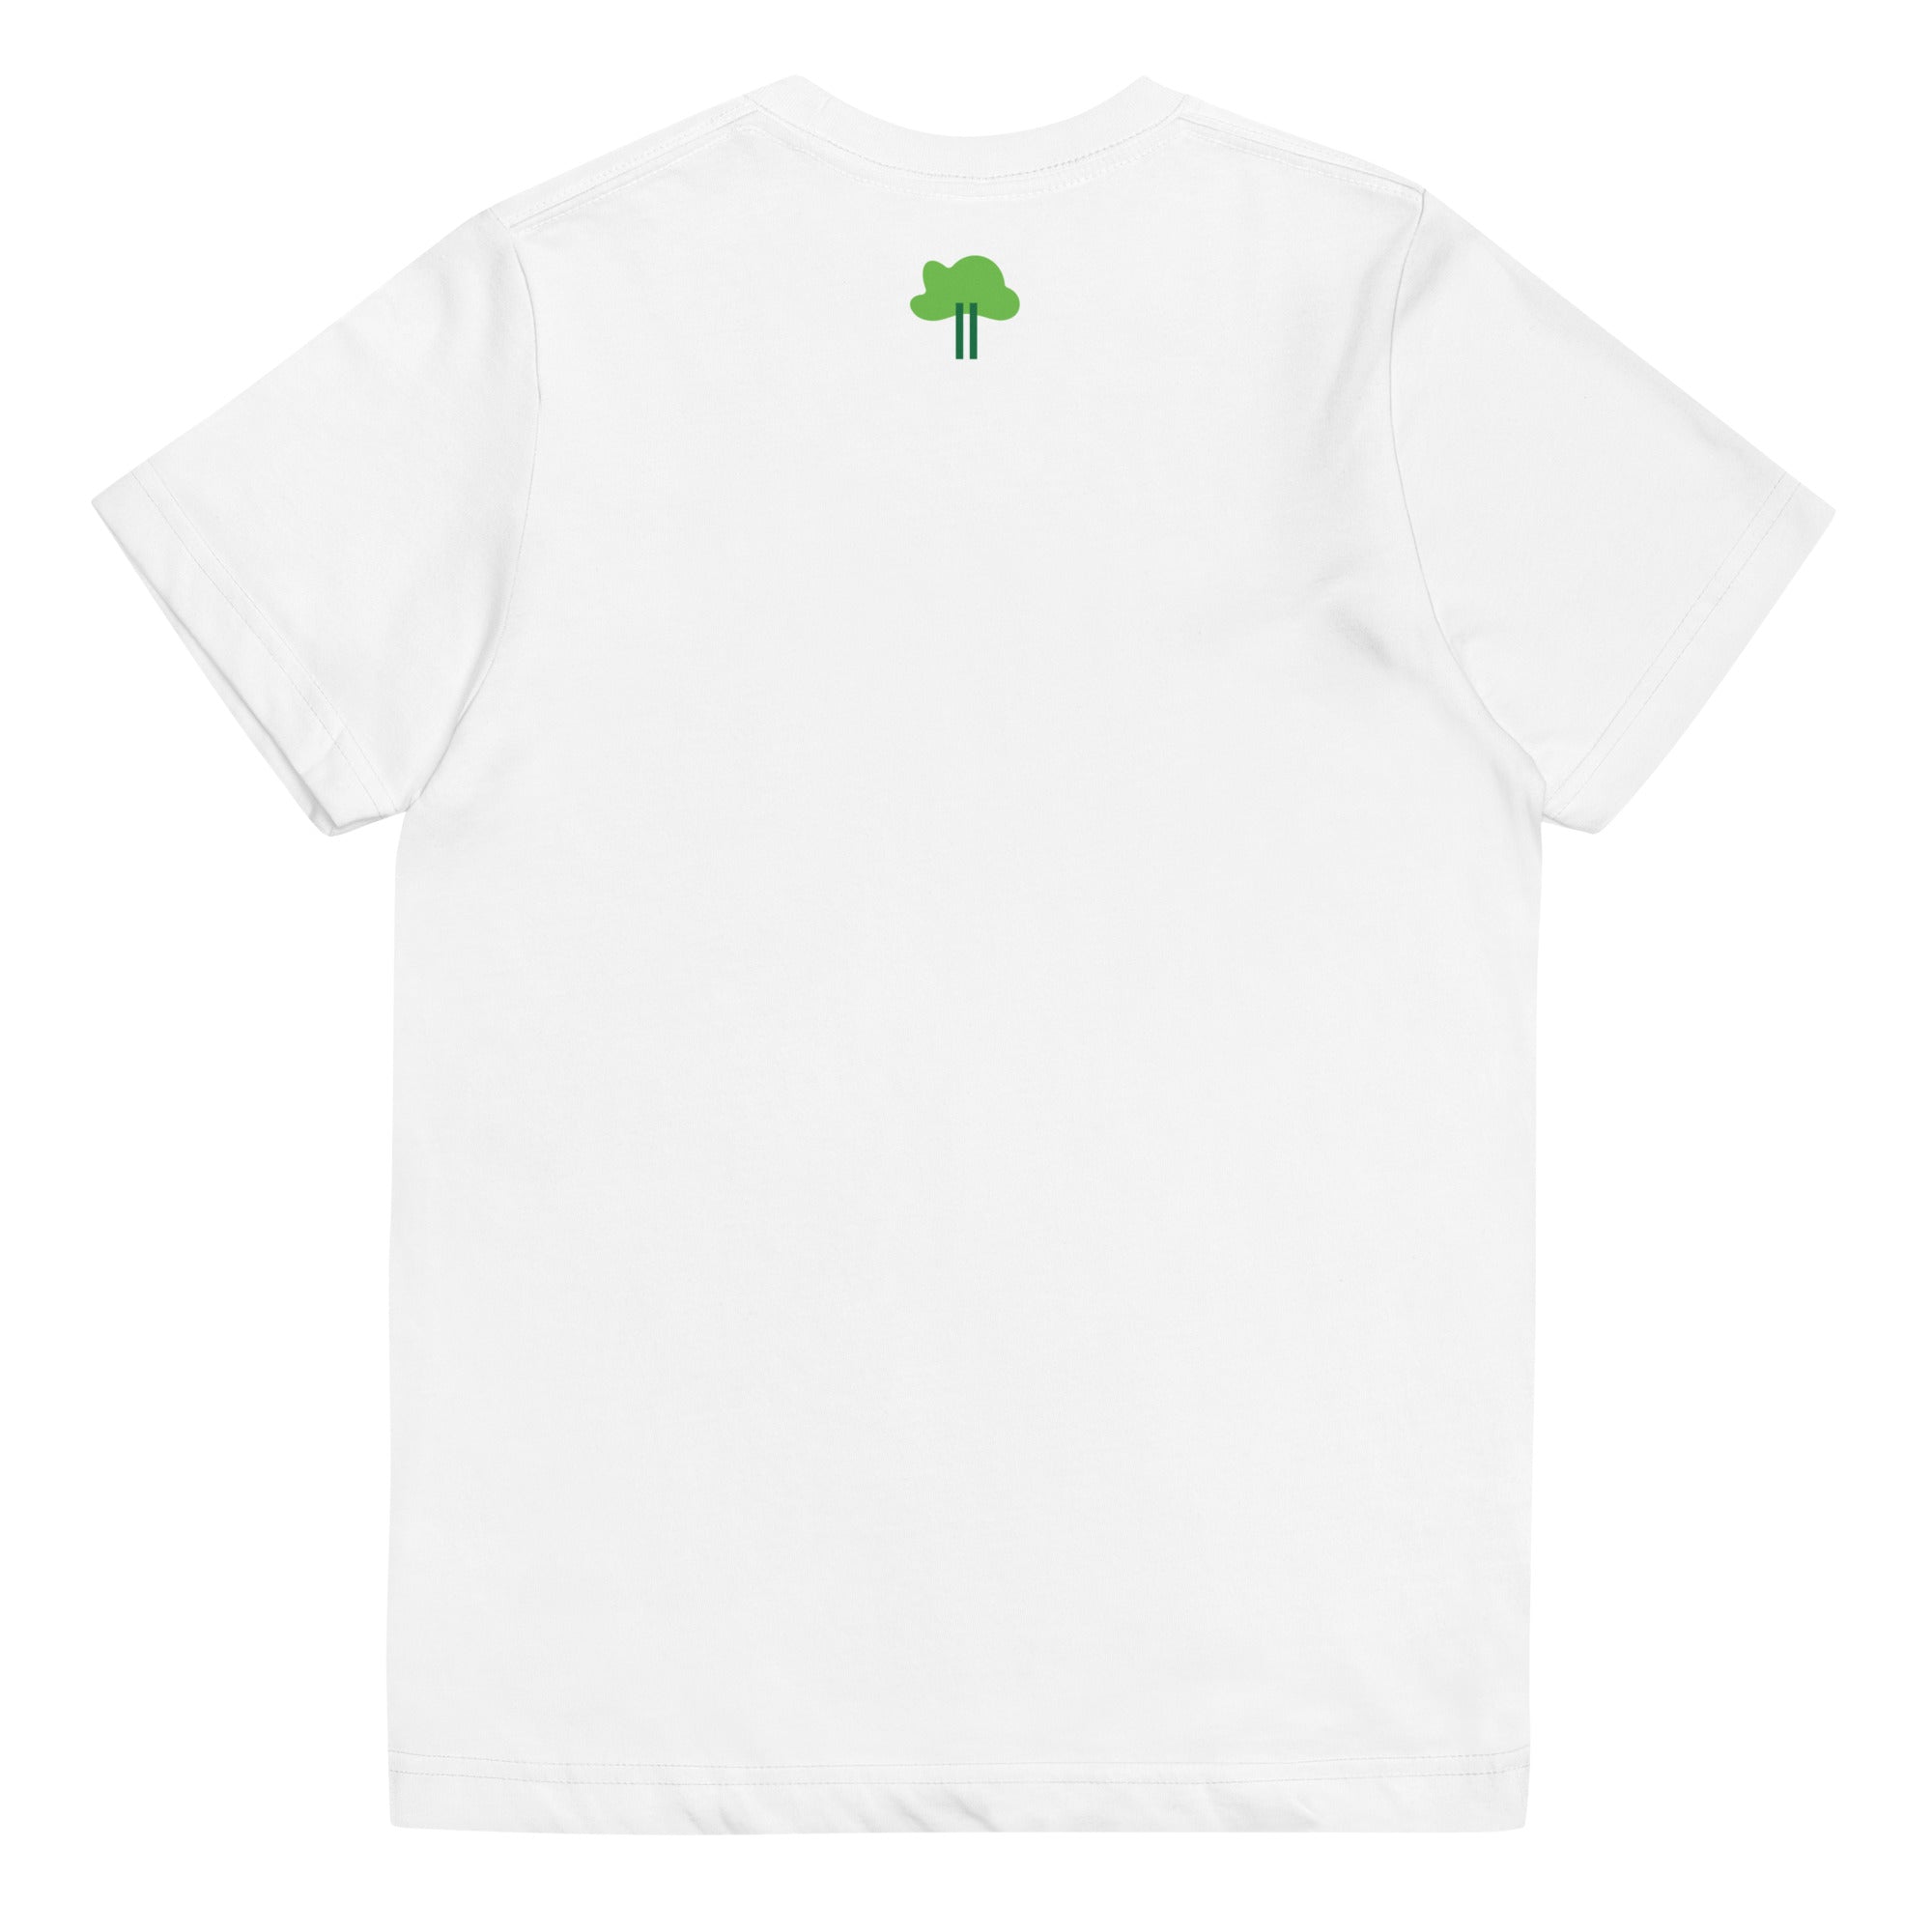 II Temp - Sabana - K1 | Youth jersey t-shirt